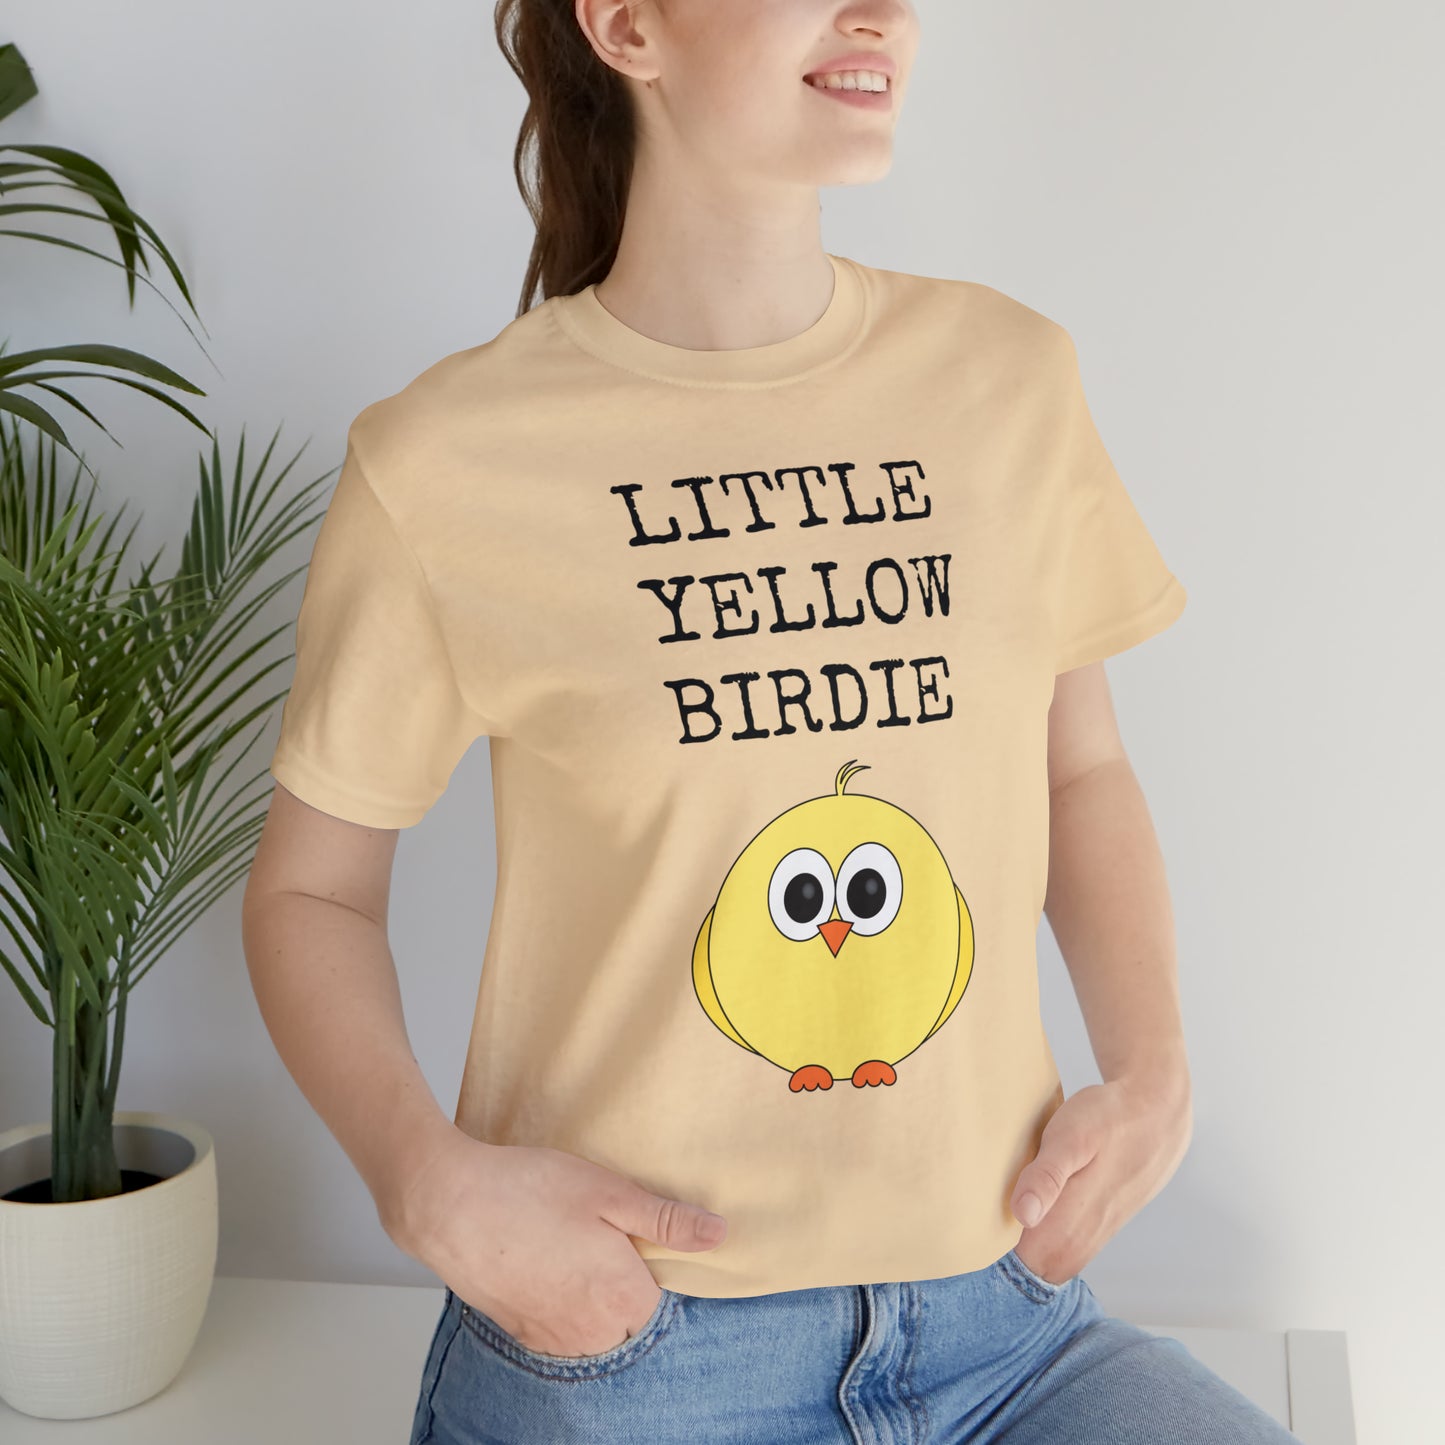 Little Yellow Birdie...